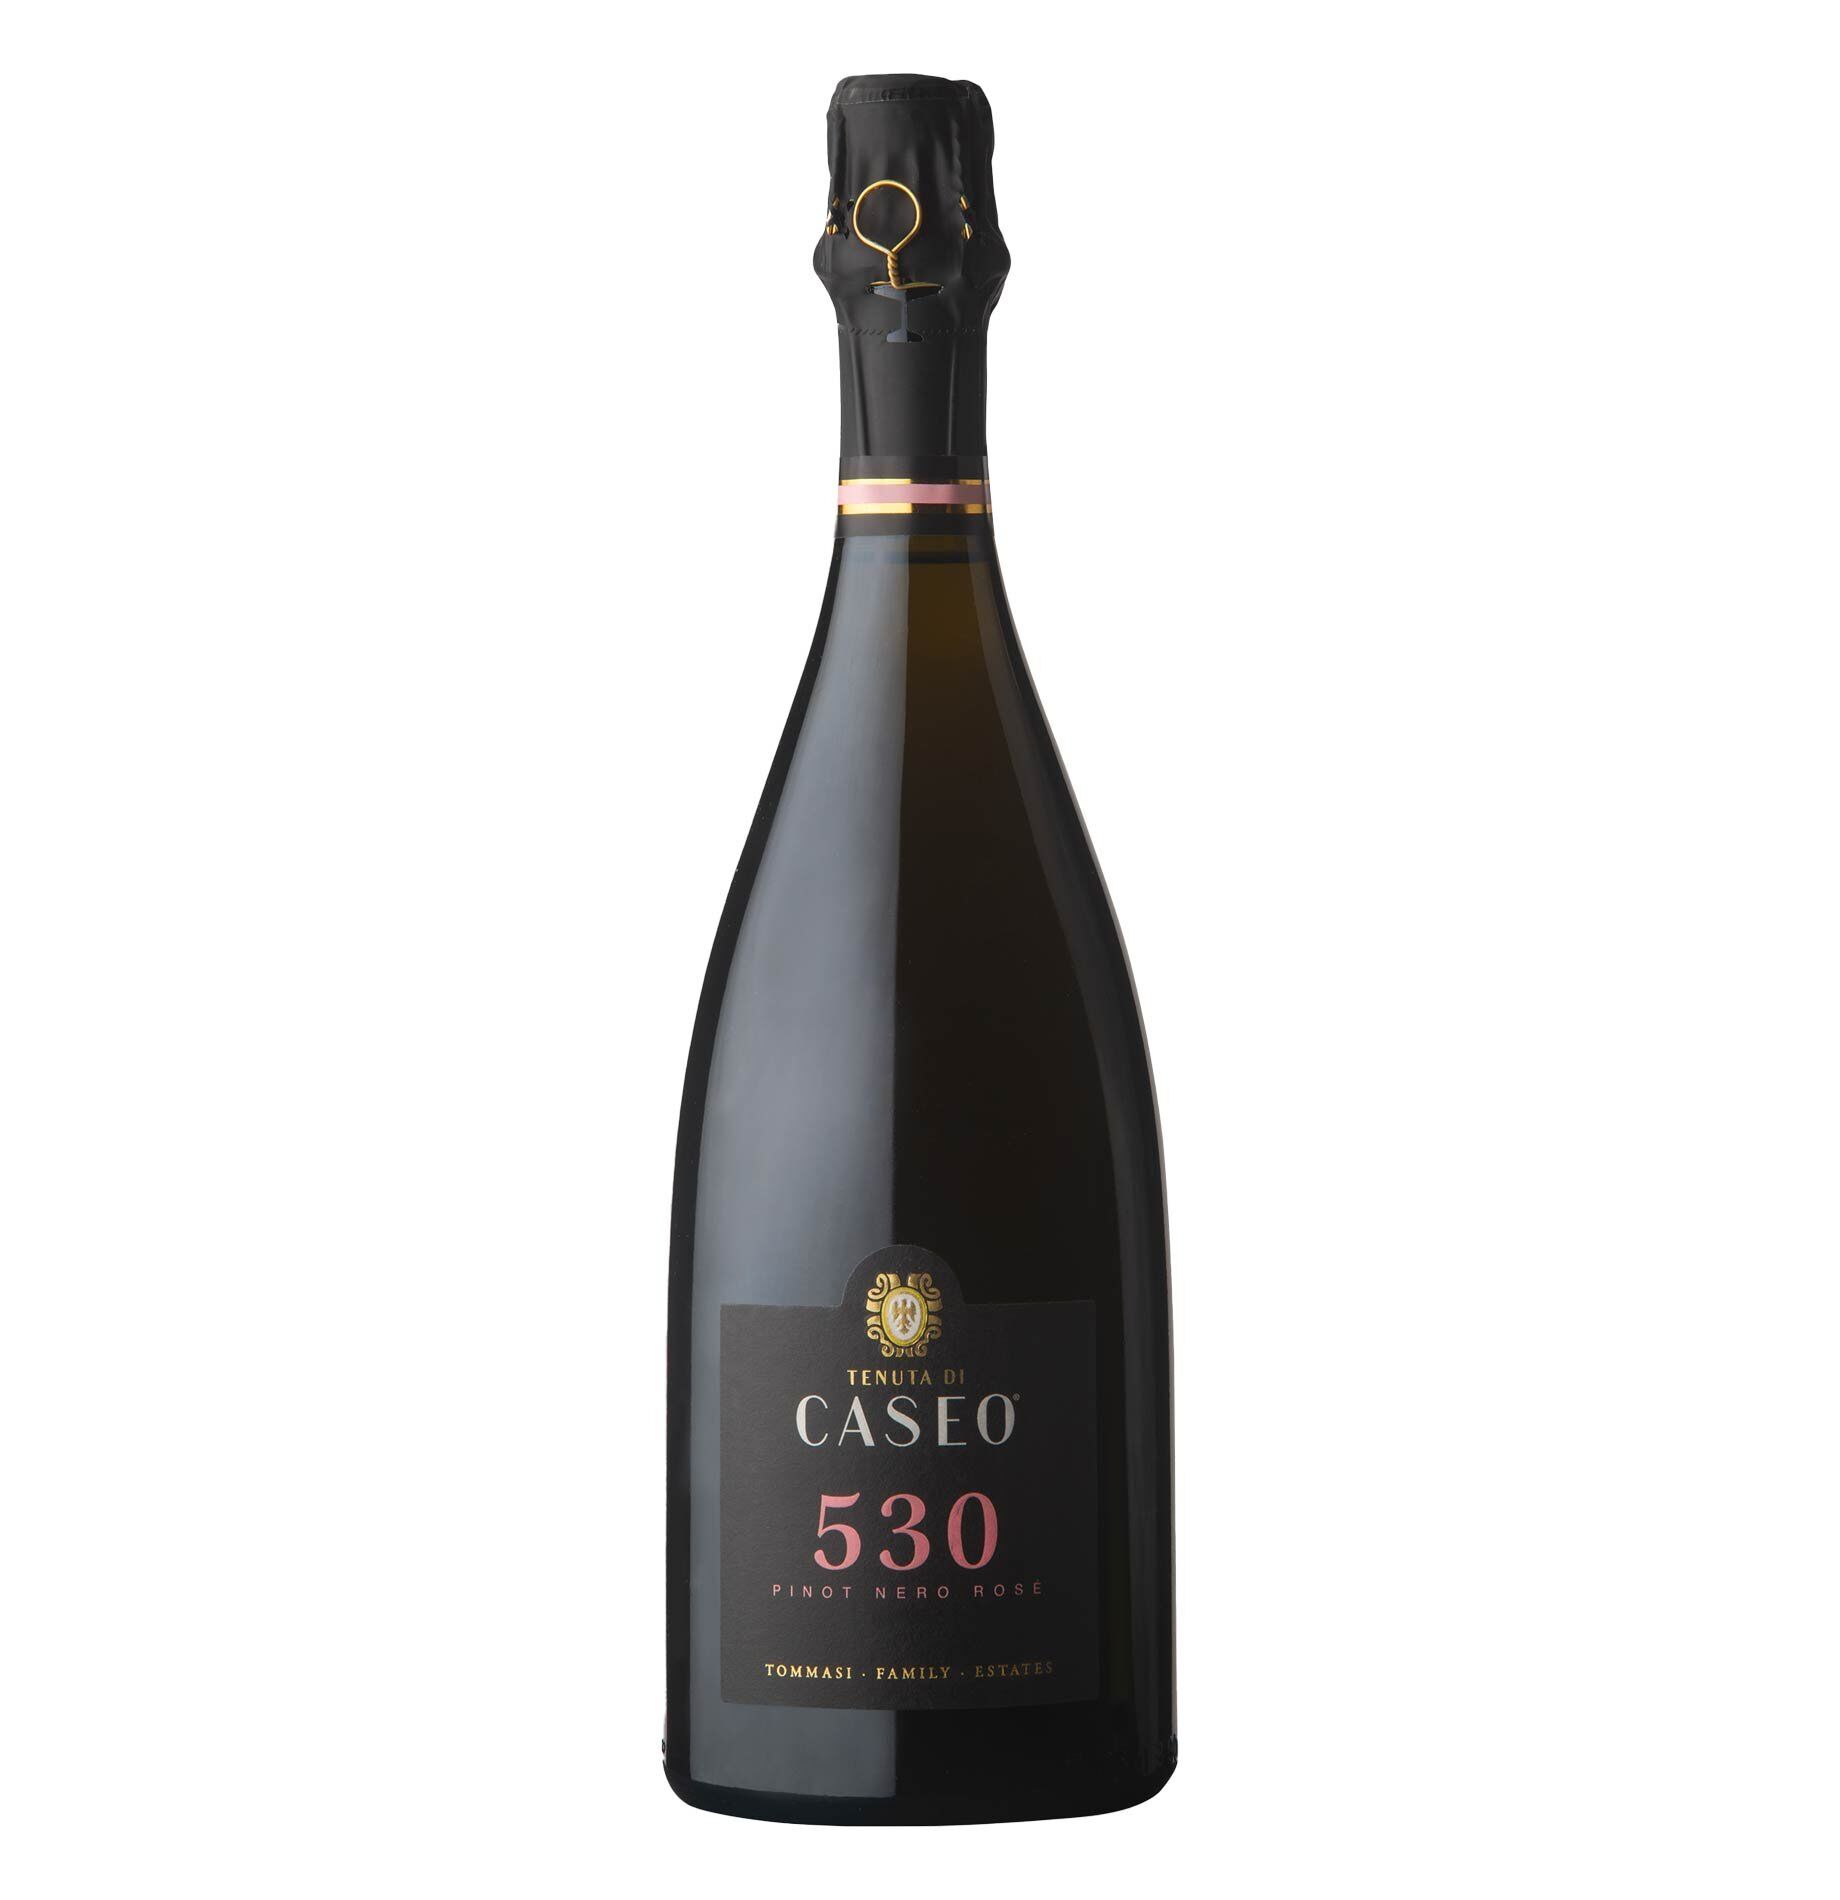 Caseo Spumante Metodo Classico Rosé Brut 530 Pinot Nero 2017